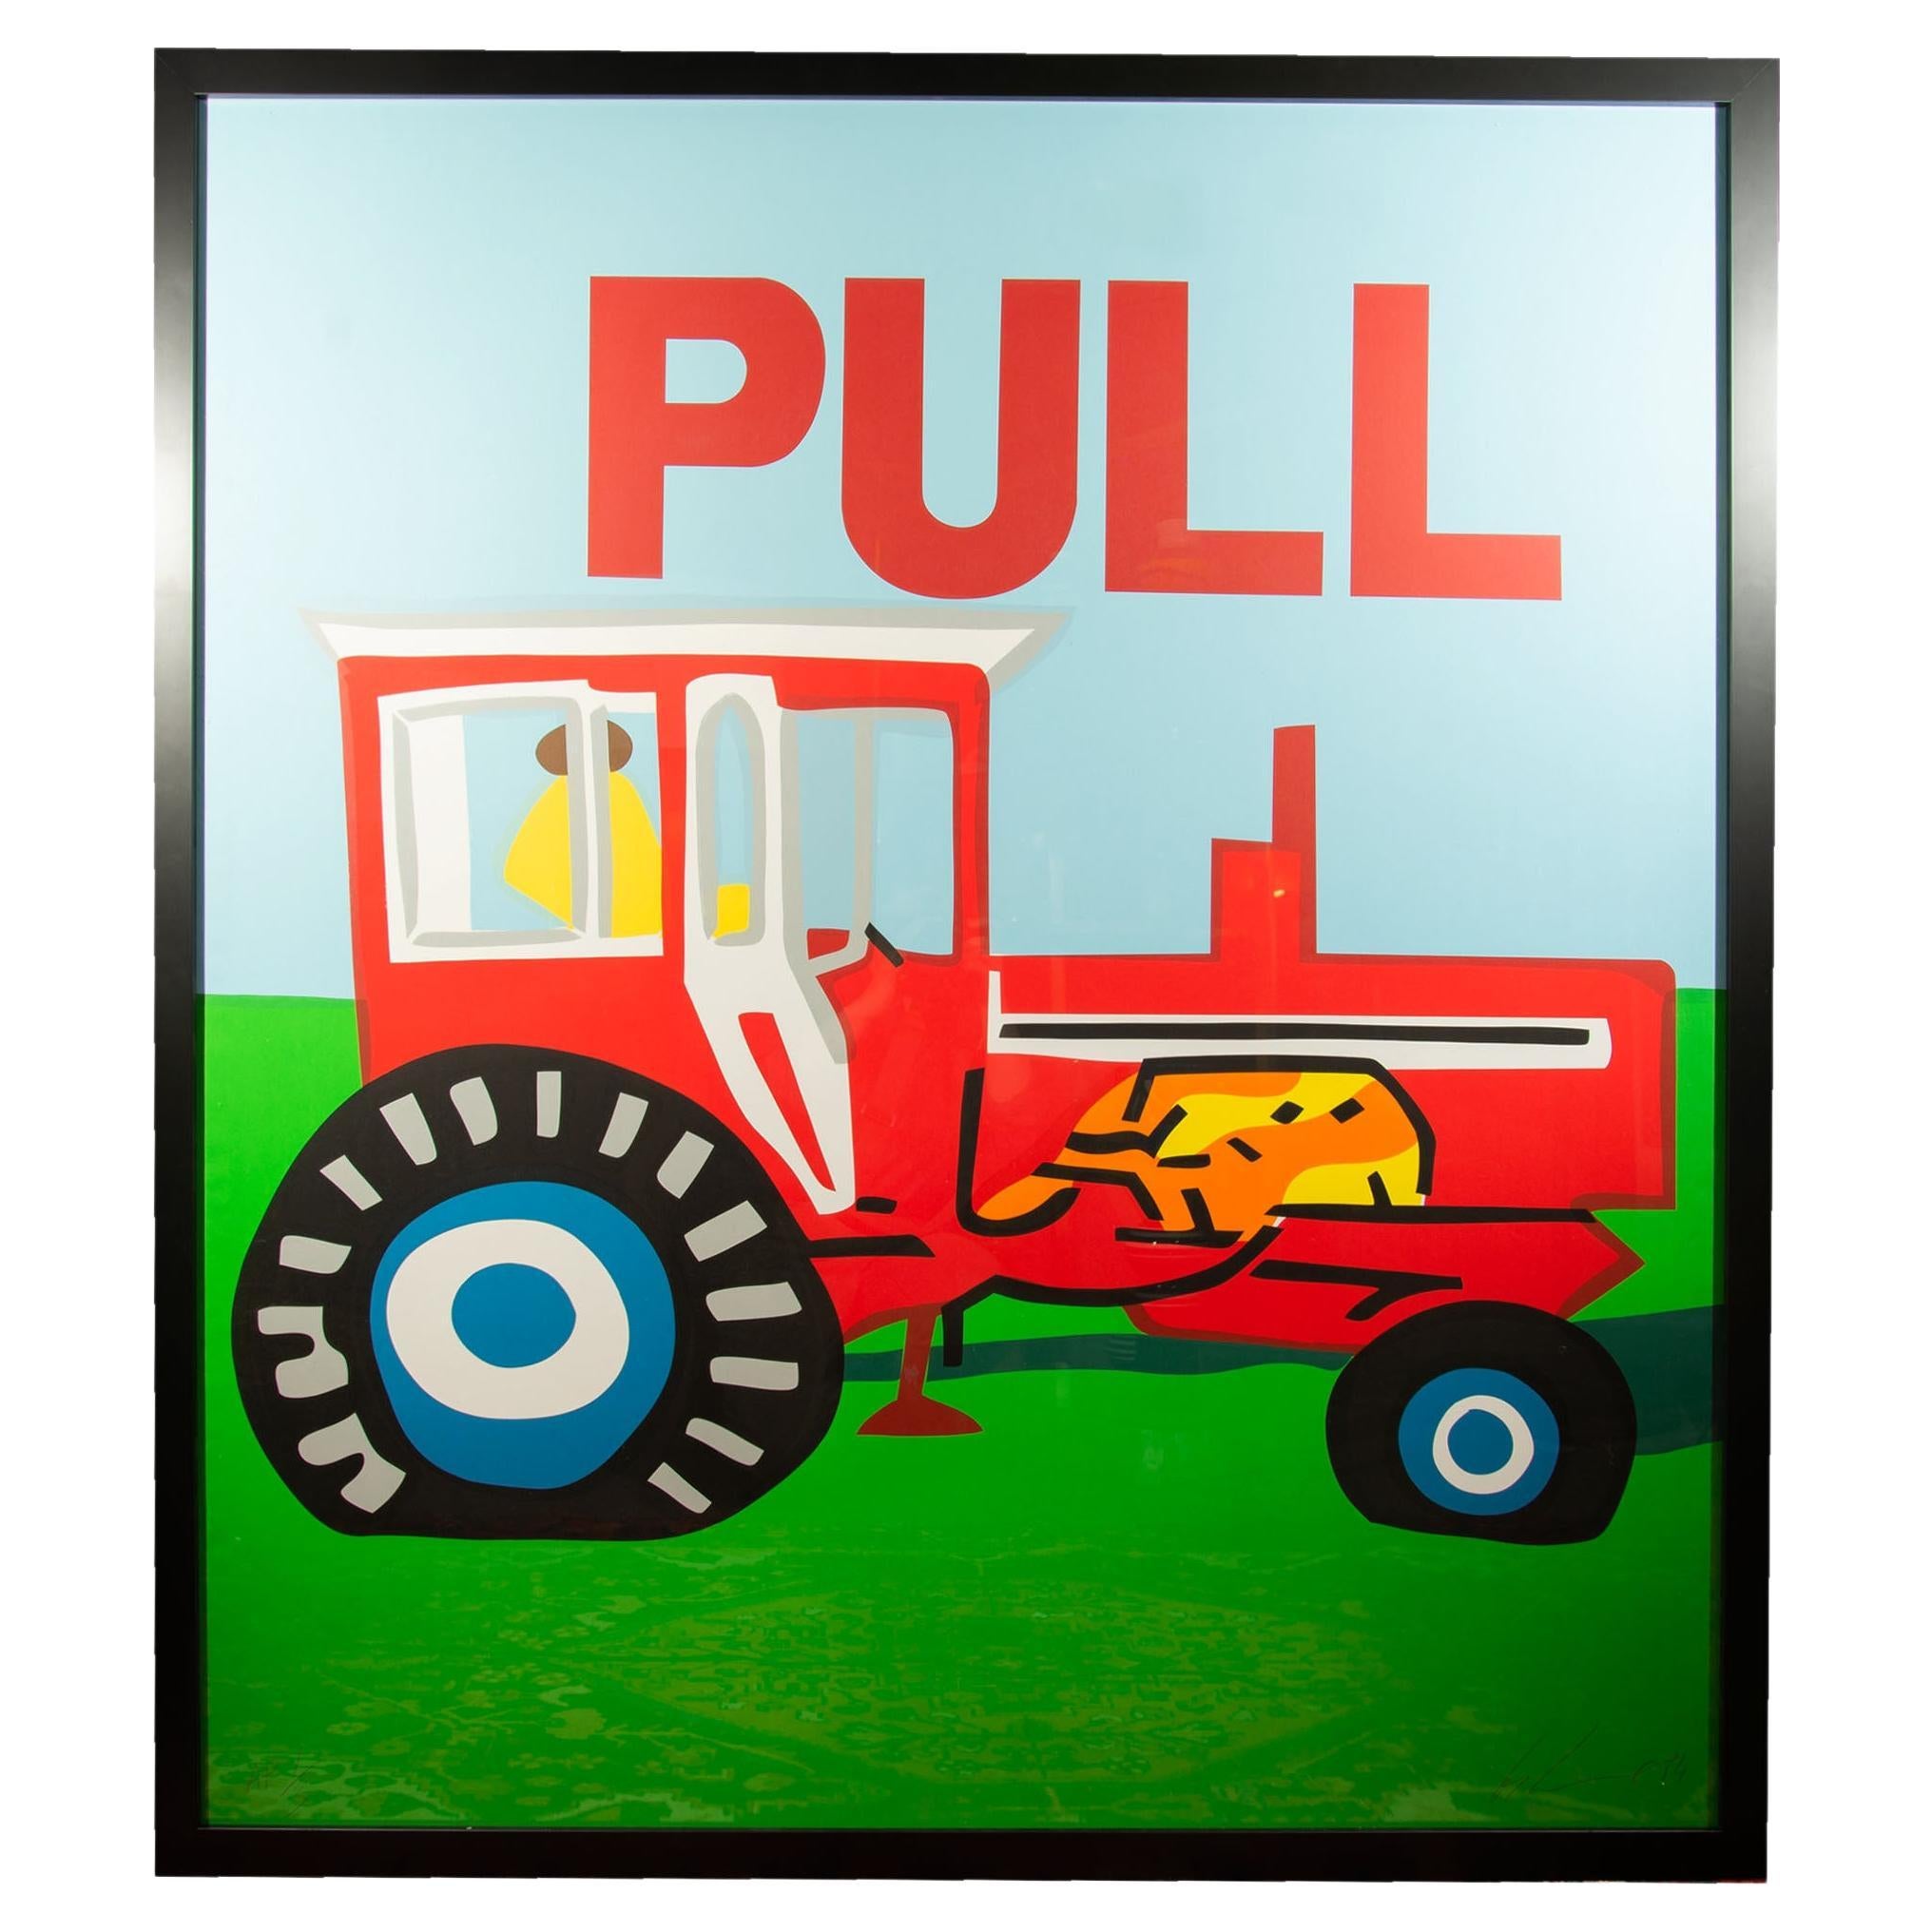 Serigrafia "Pull" firmata da Les Levine, prova d'artista